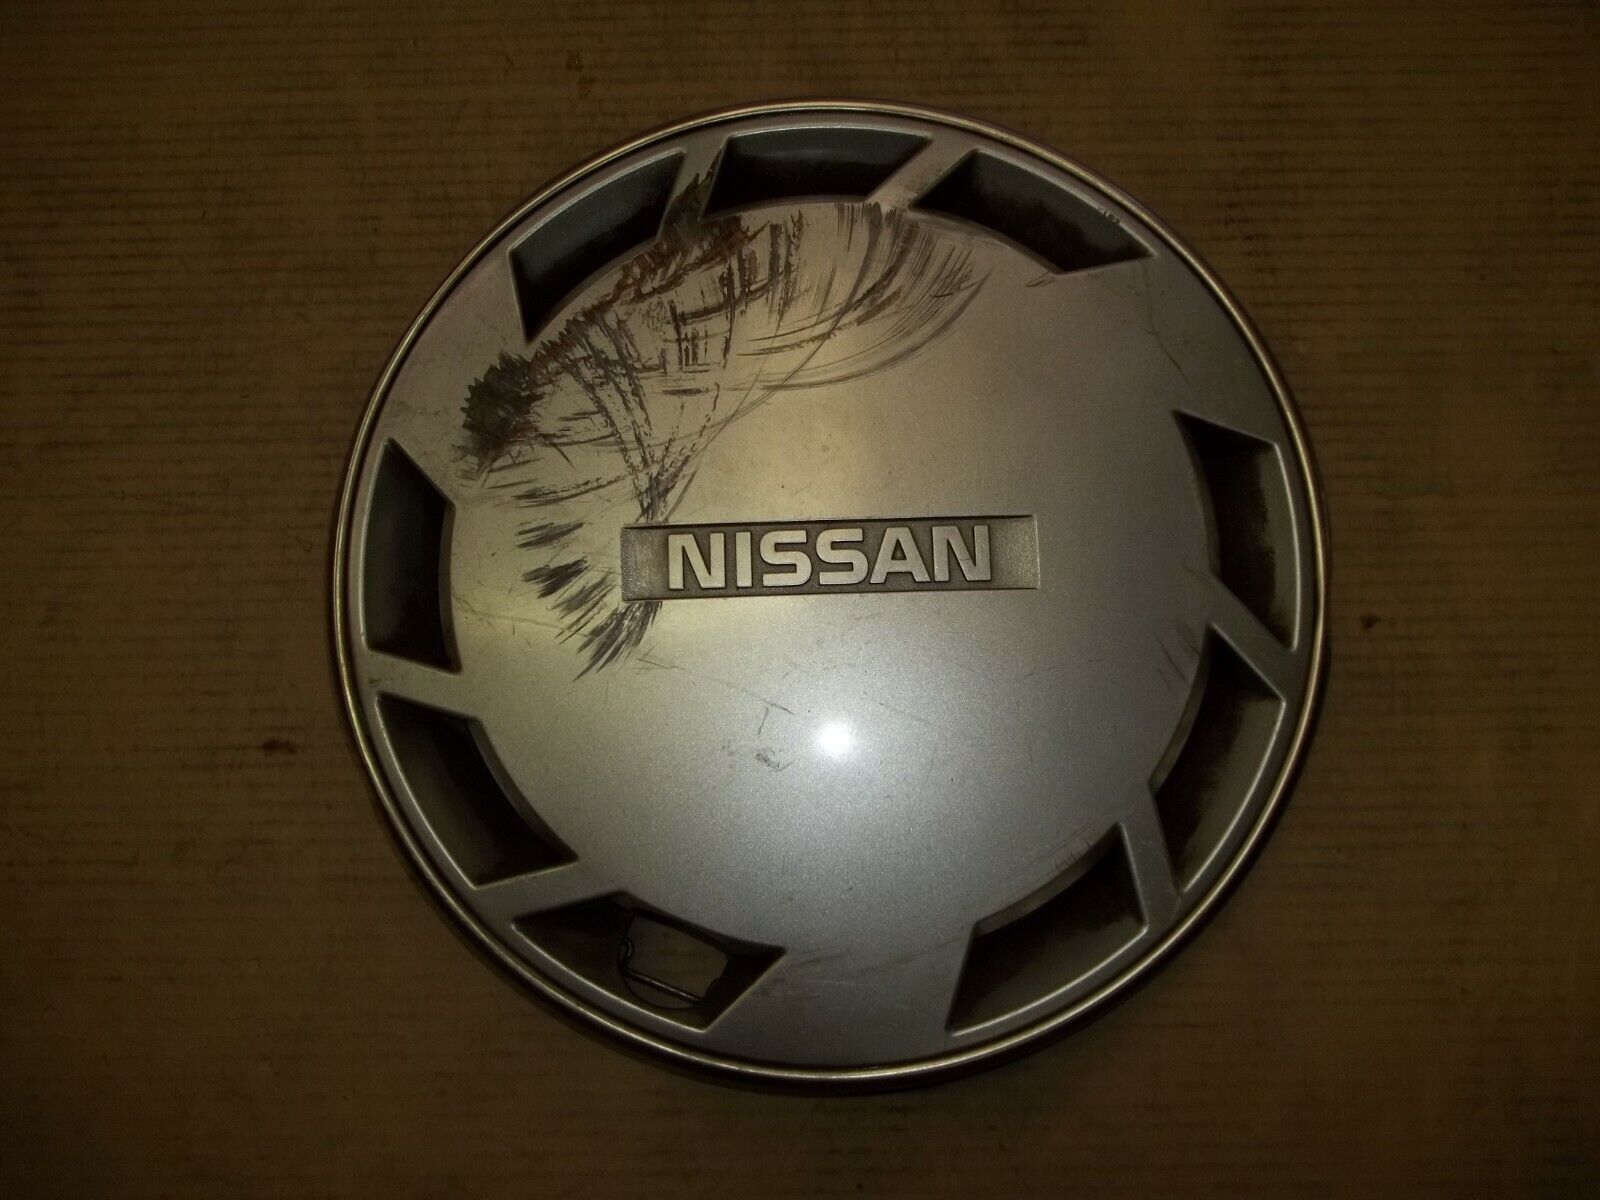 Nissan Stanza Van Hubcap Rim Wheel Cover Hub Cap 86 87 88 14